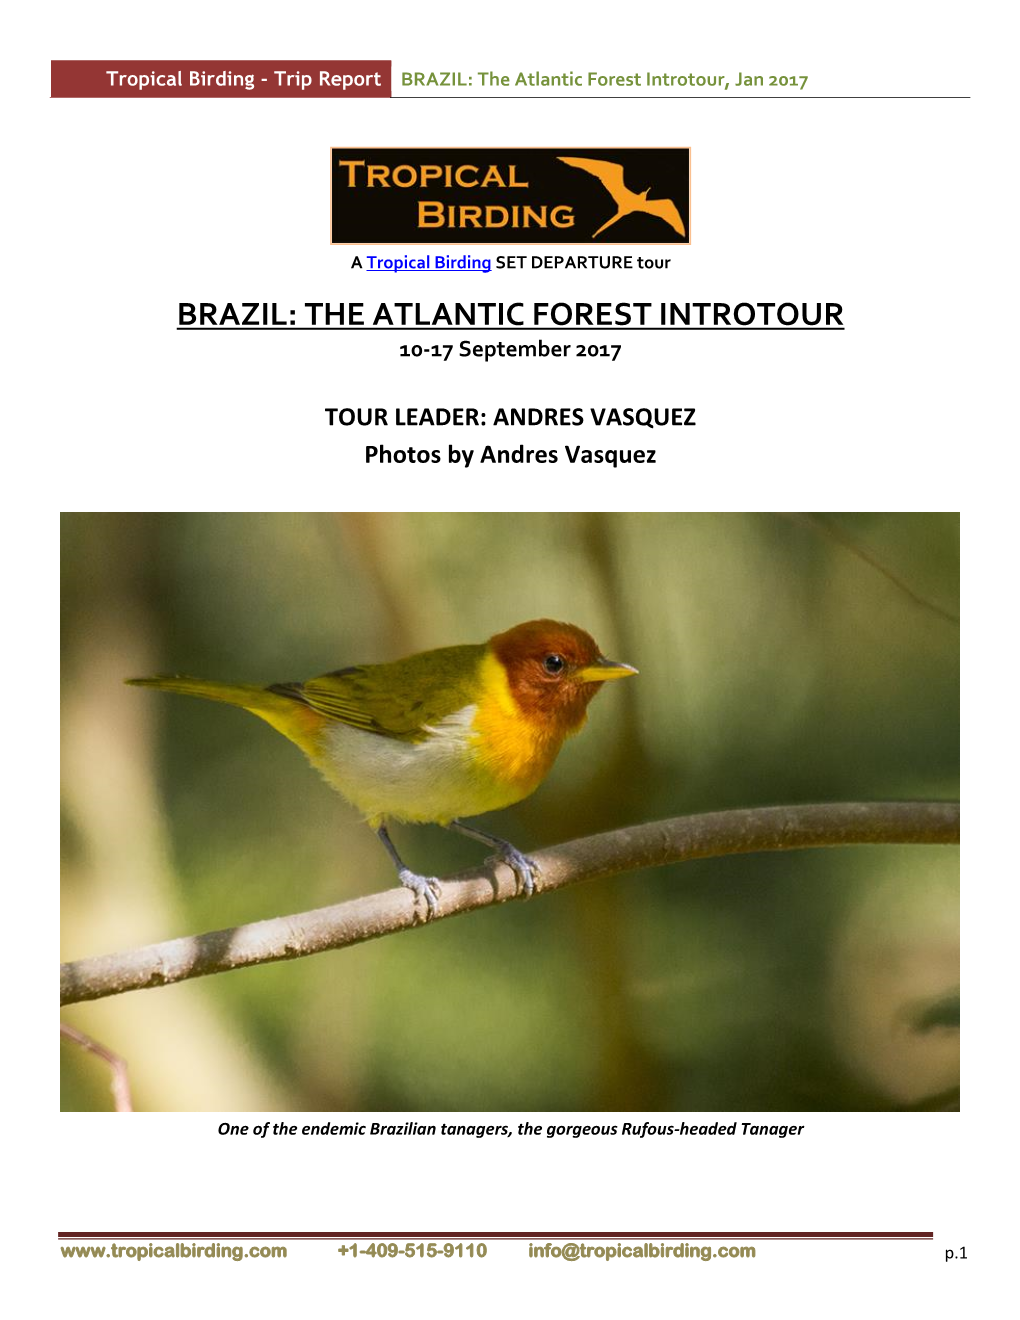 BRAZIL: the Atlantic Forest Introtour, Jan 2017